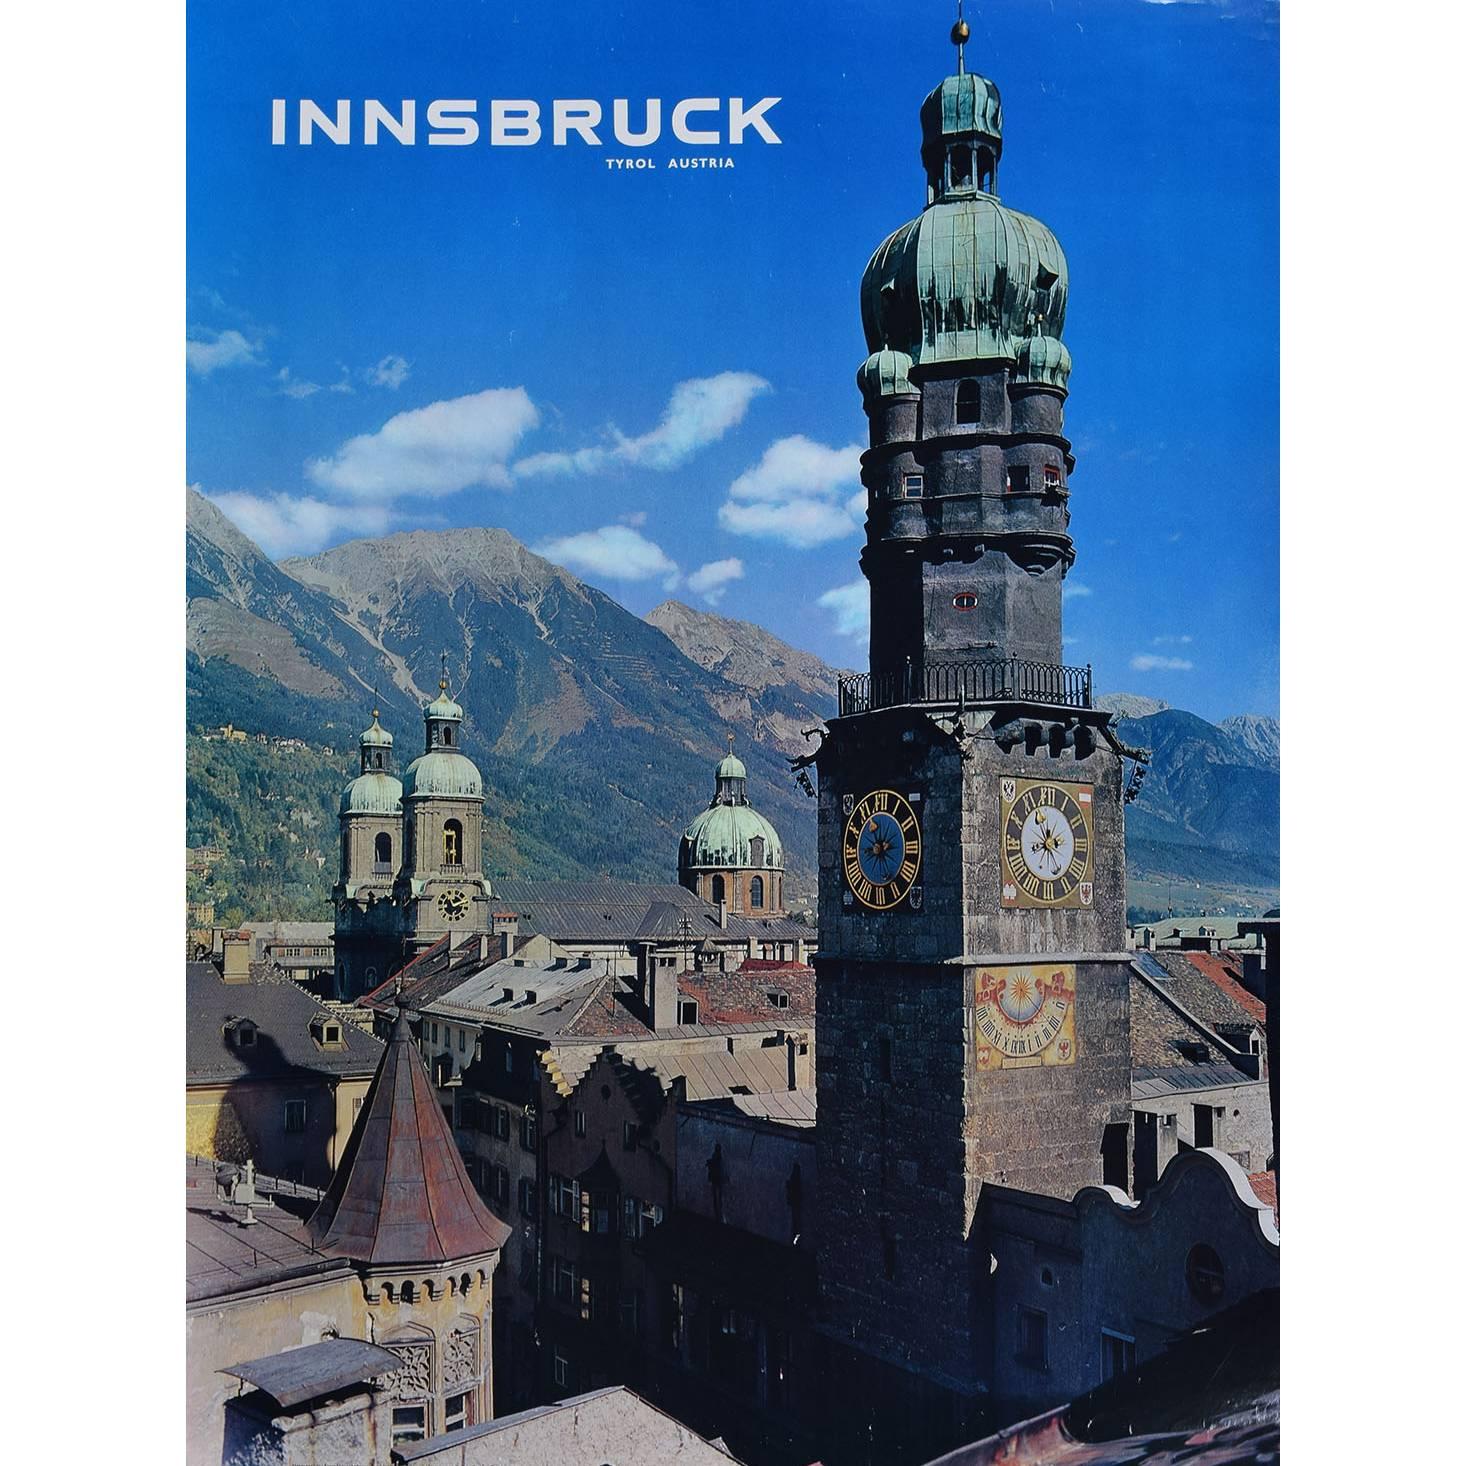 Unknown Landscape Print - Innsbruck: Tyrol, Austria Original Vintage Travel Poster - Skiing resort